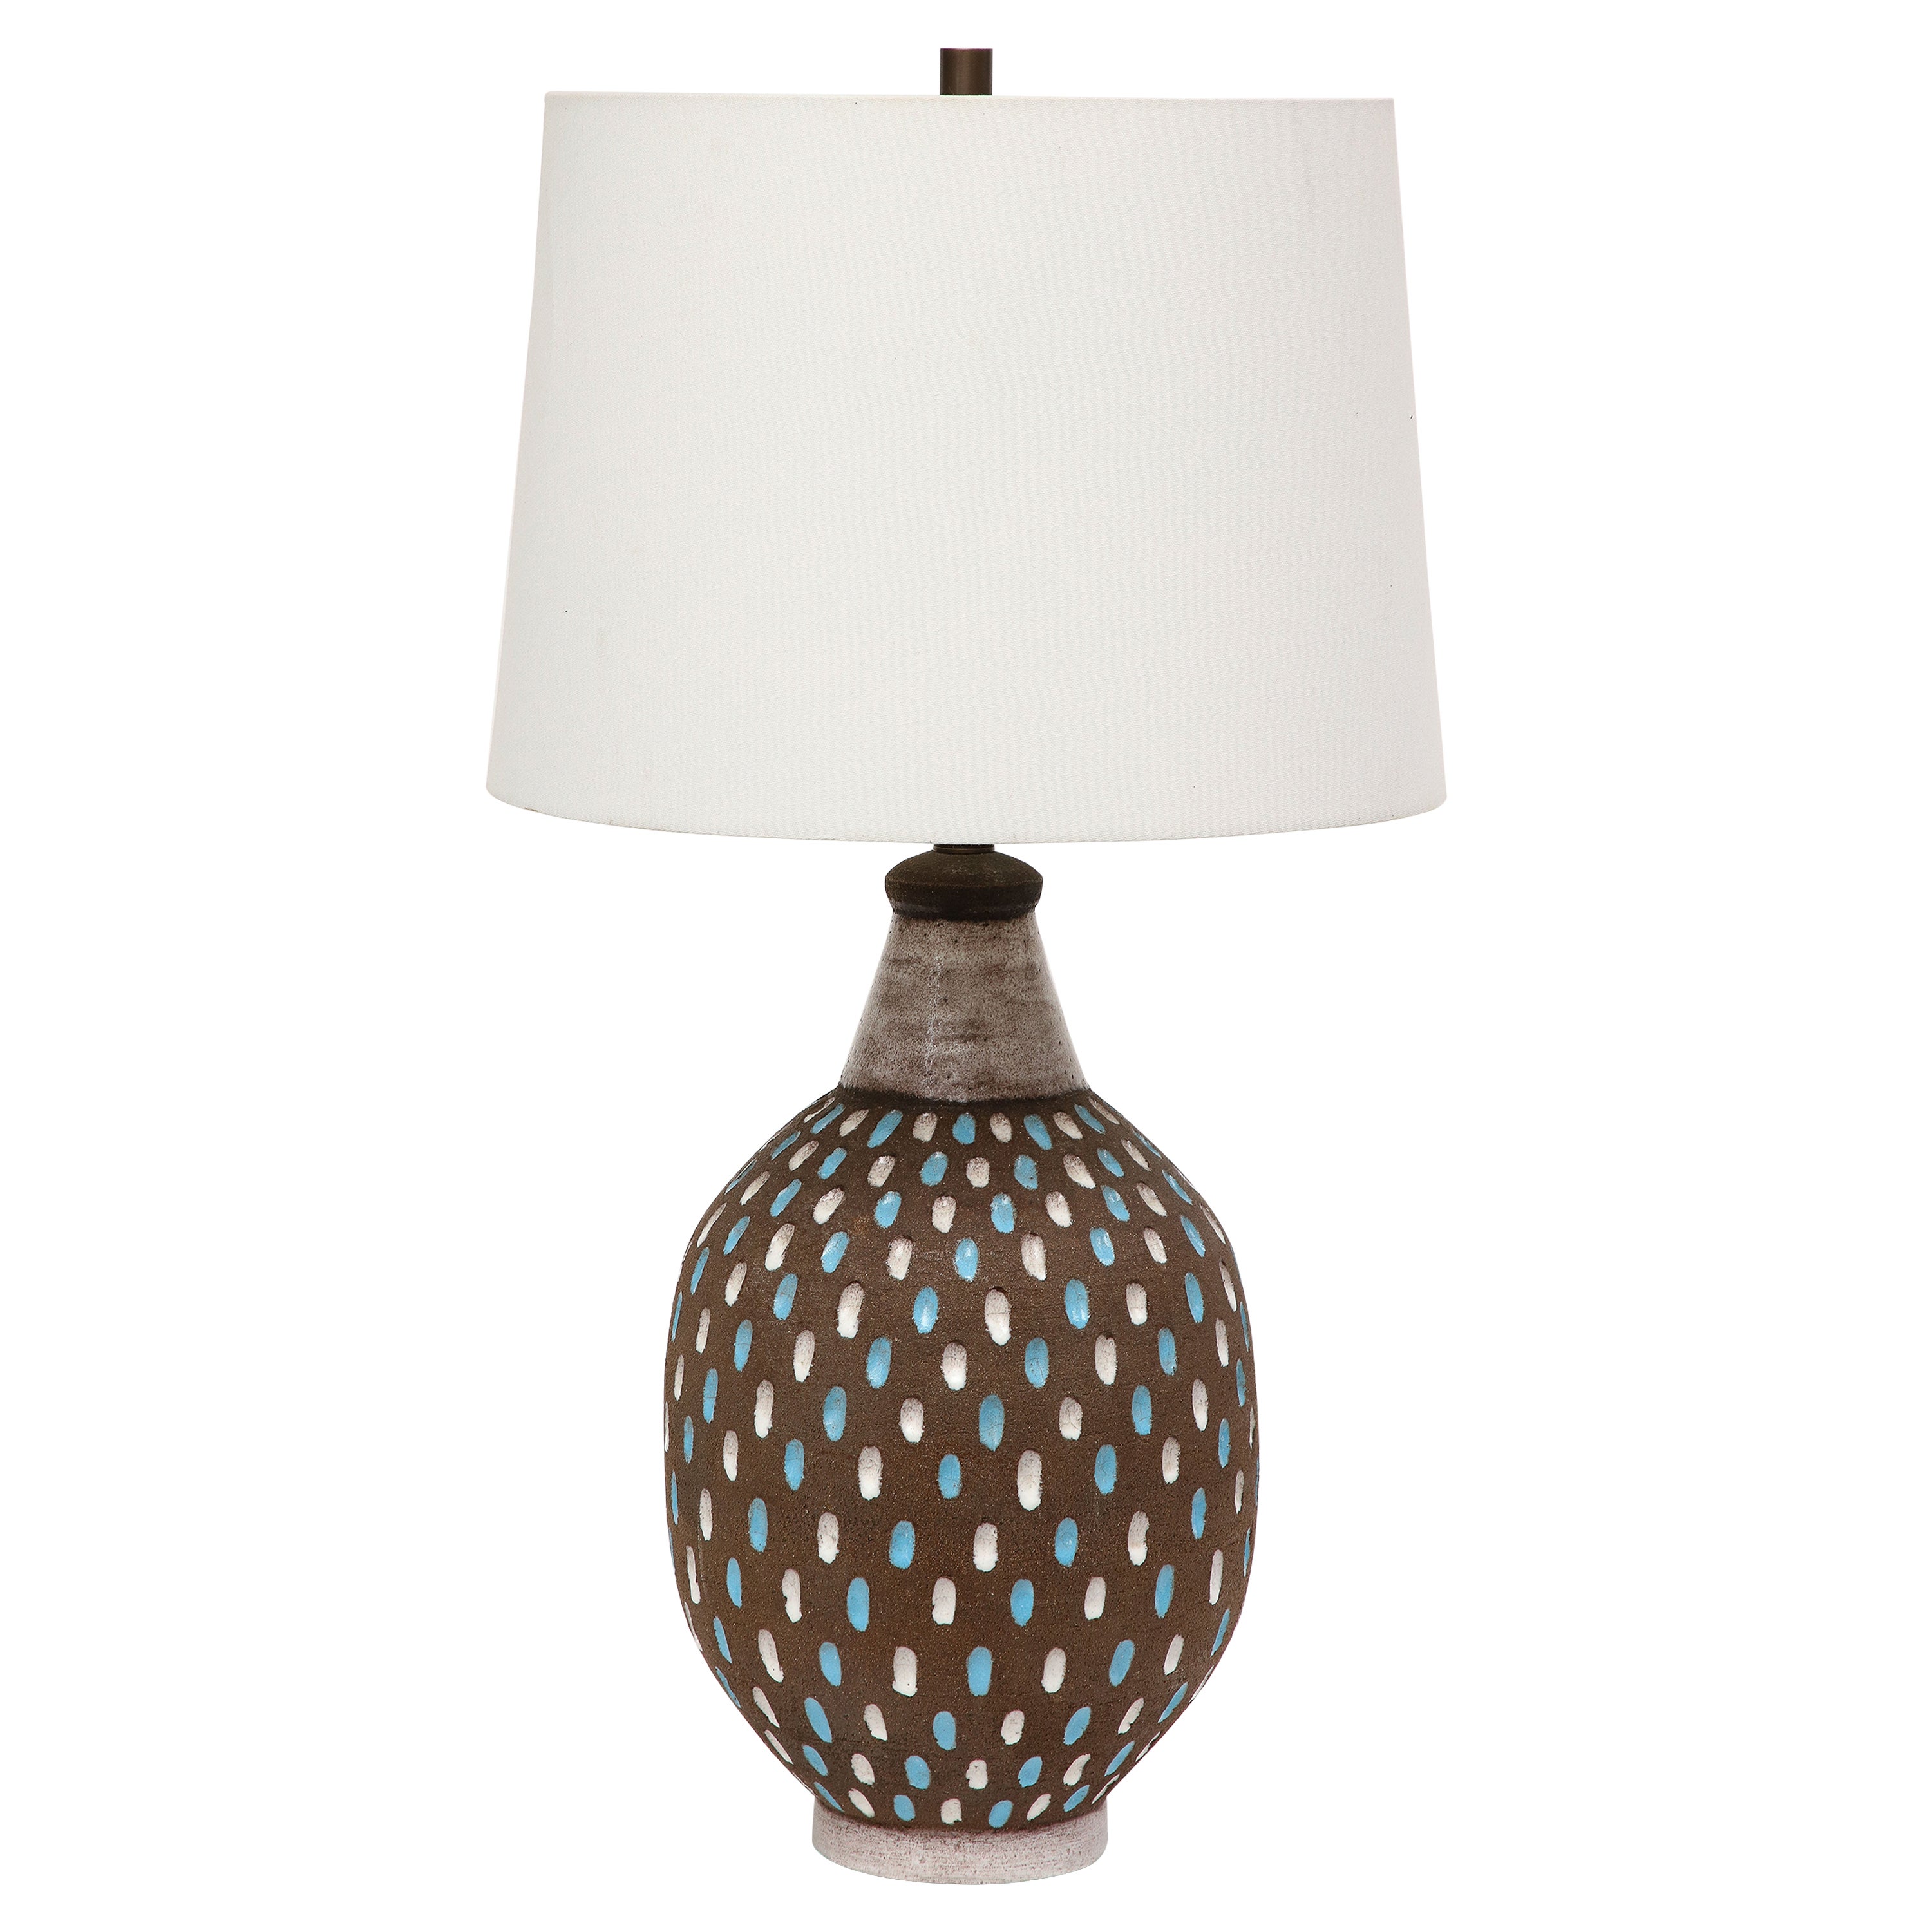 Bitossi Lamp, Ceramic, Brown, White, Blue Speckled, Signed For Sale